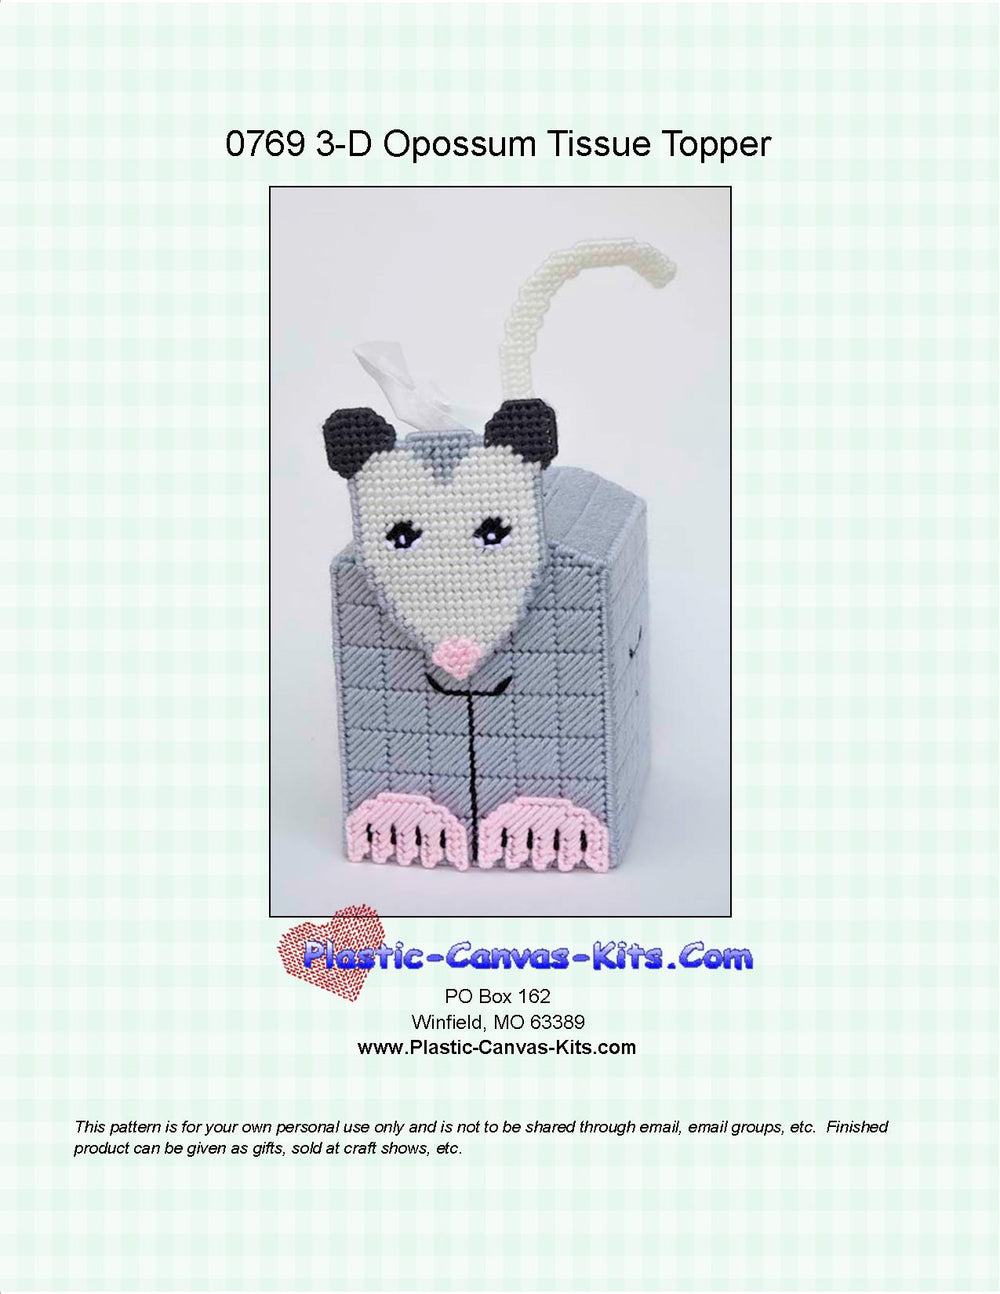 Opossum 3-D Tissue Topper